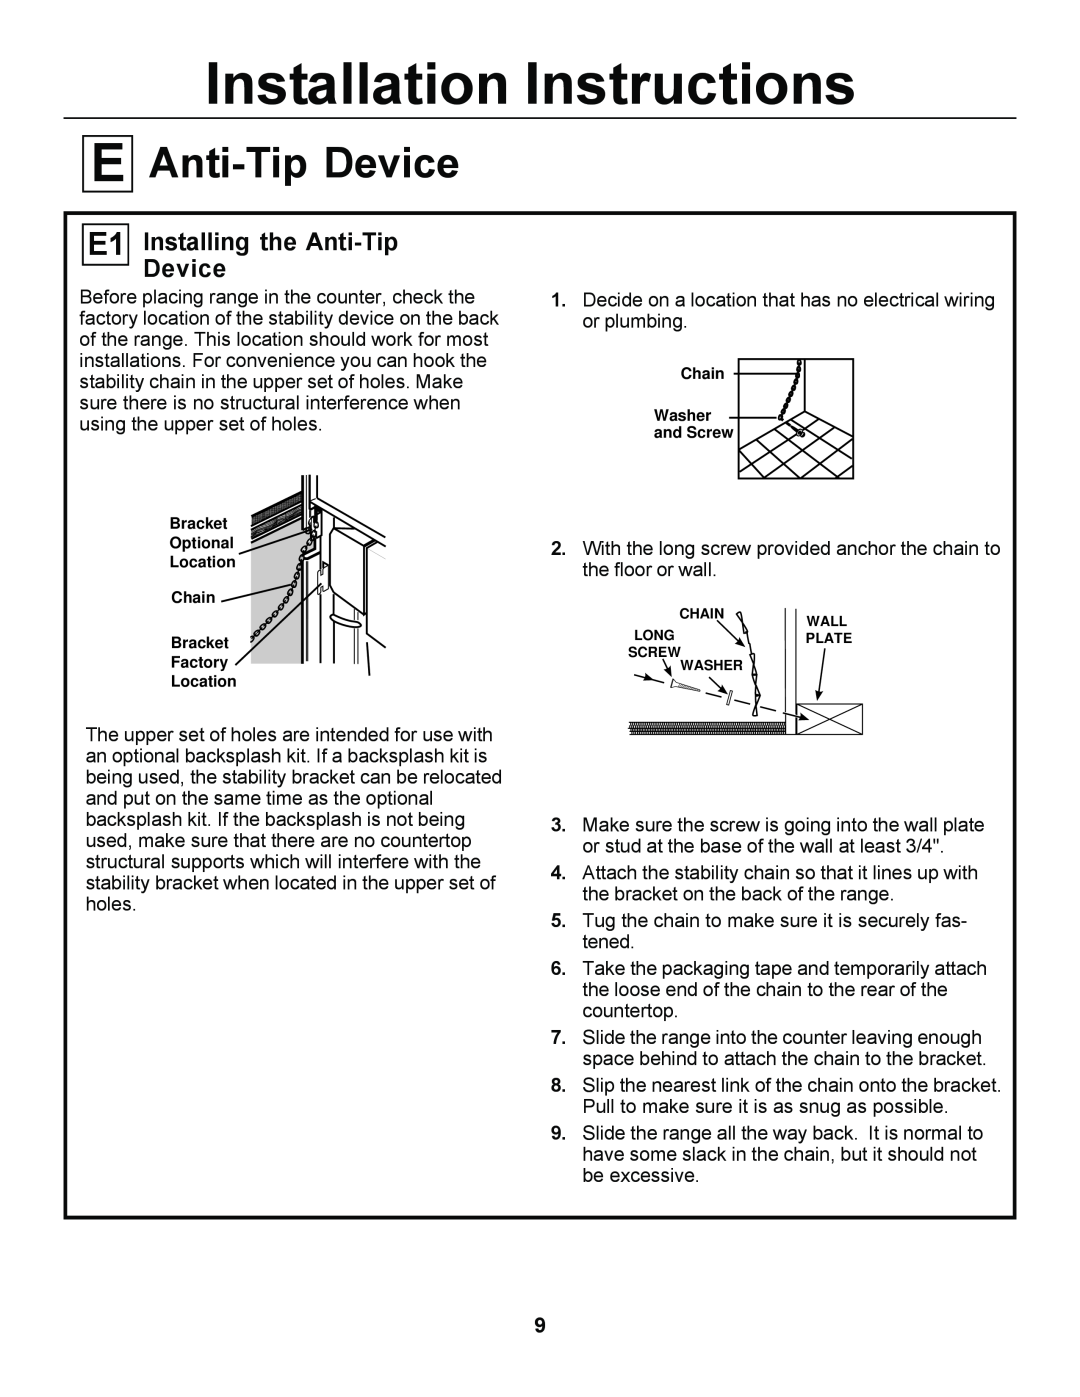 GE JGSP23, JGSP44 manual Anti-Tip Device, E1 InstallingDevice the Anti-Tip, Installation Instructions 